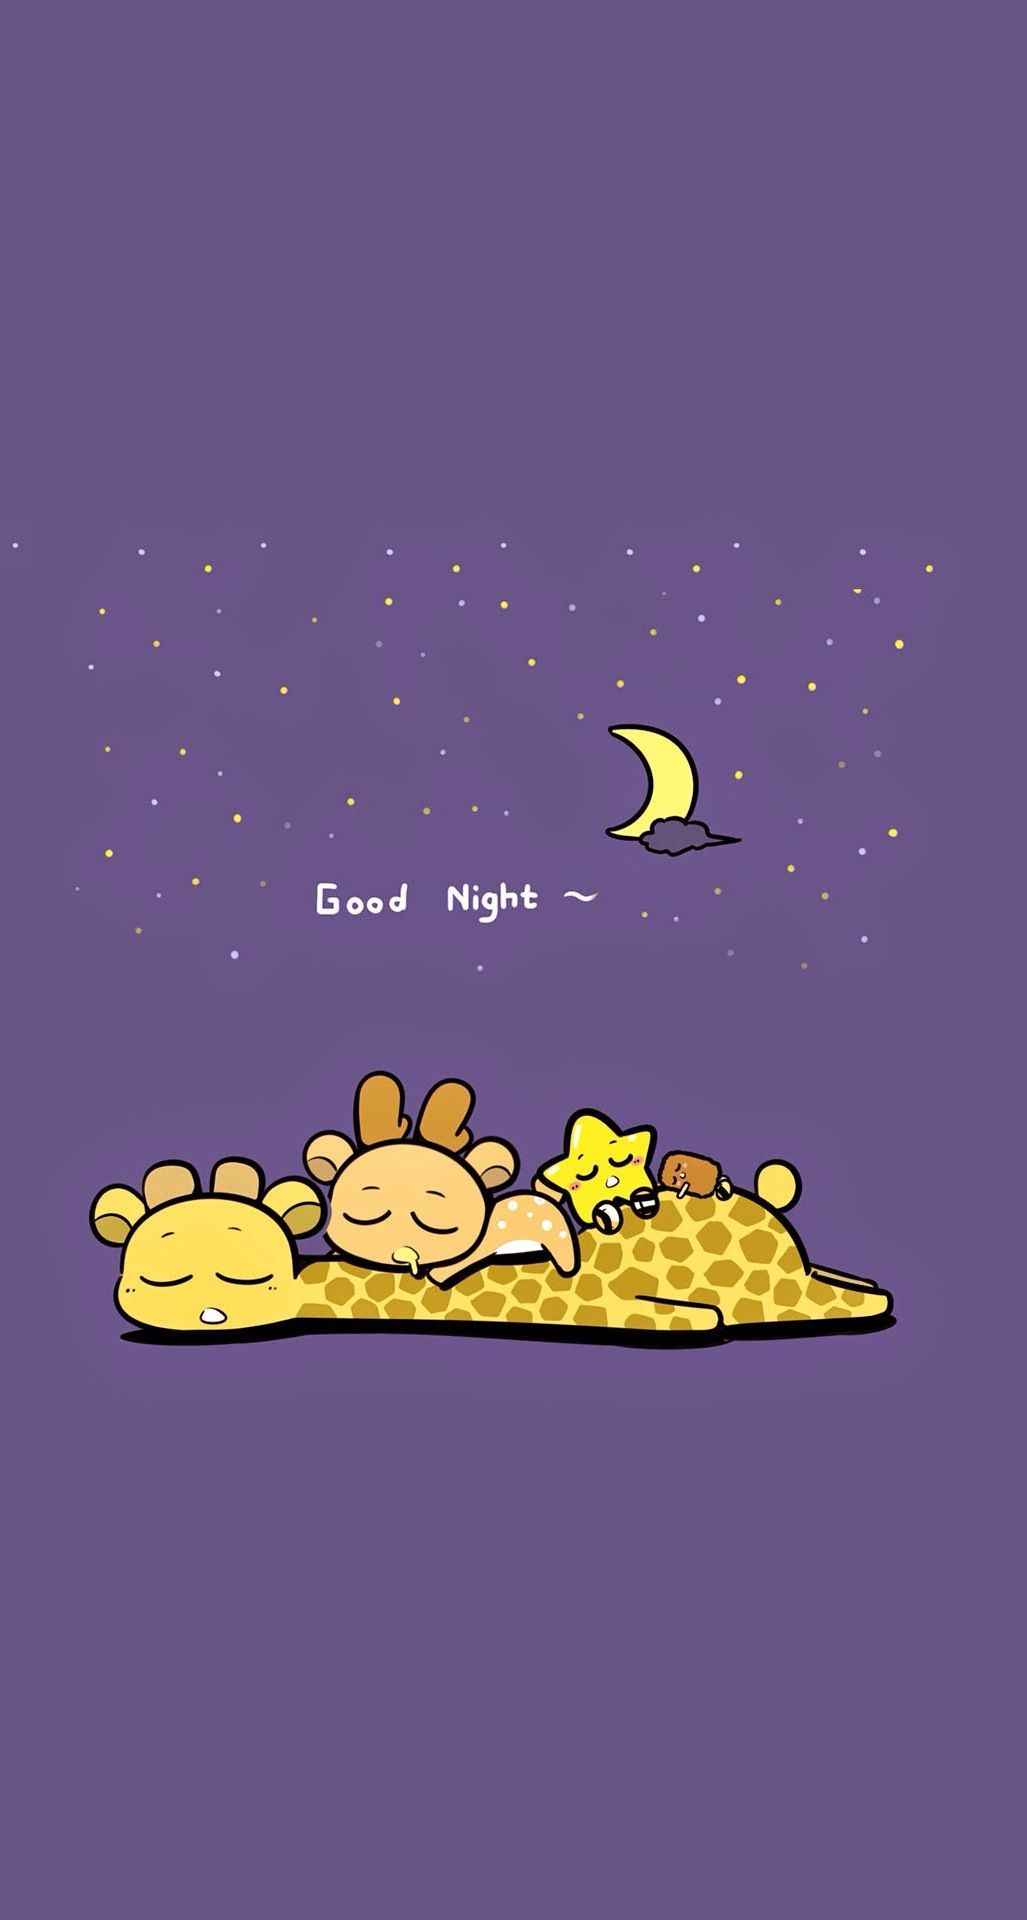 Sleeping Giraffe. Tap for more Cute Wildlife Animals Cartoon